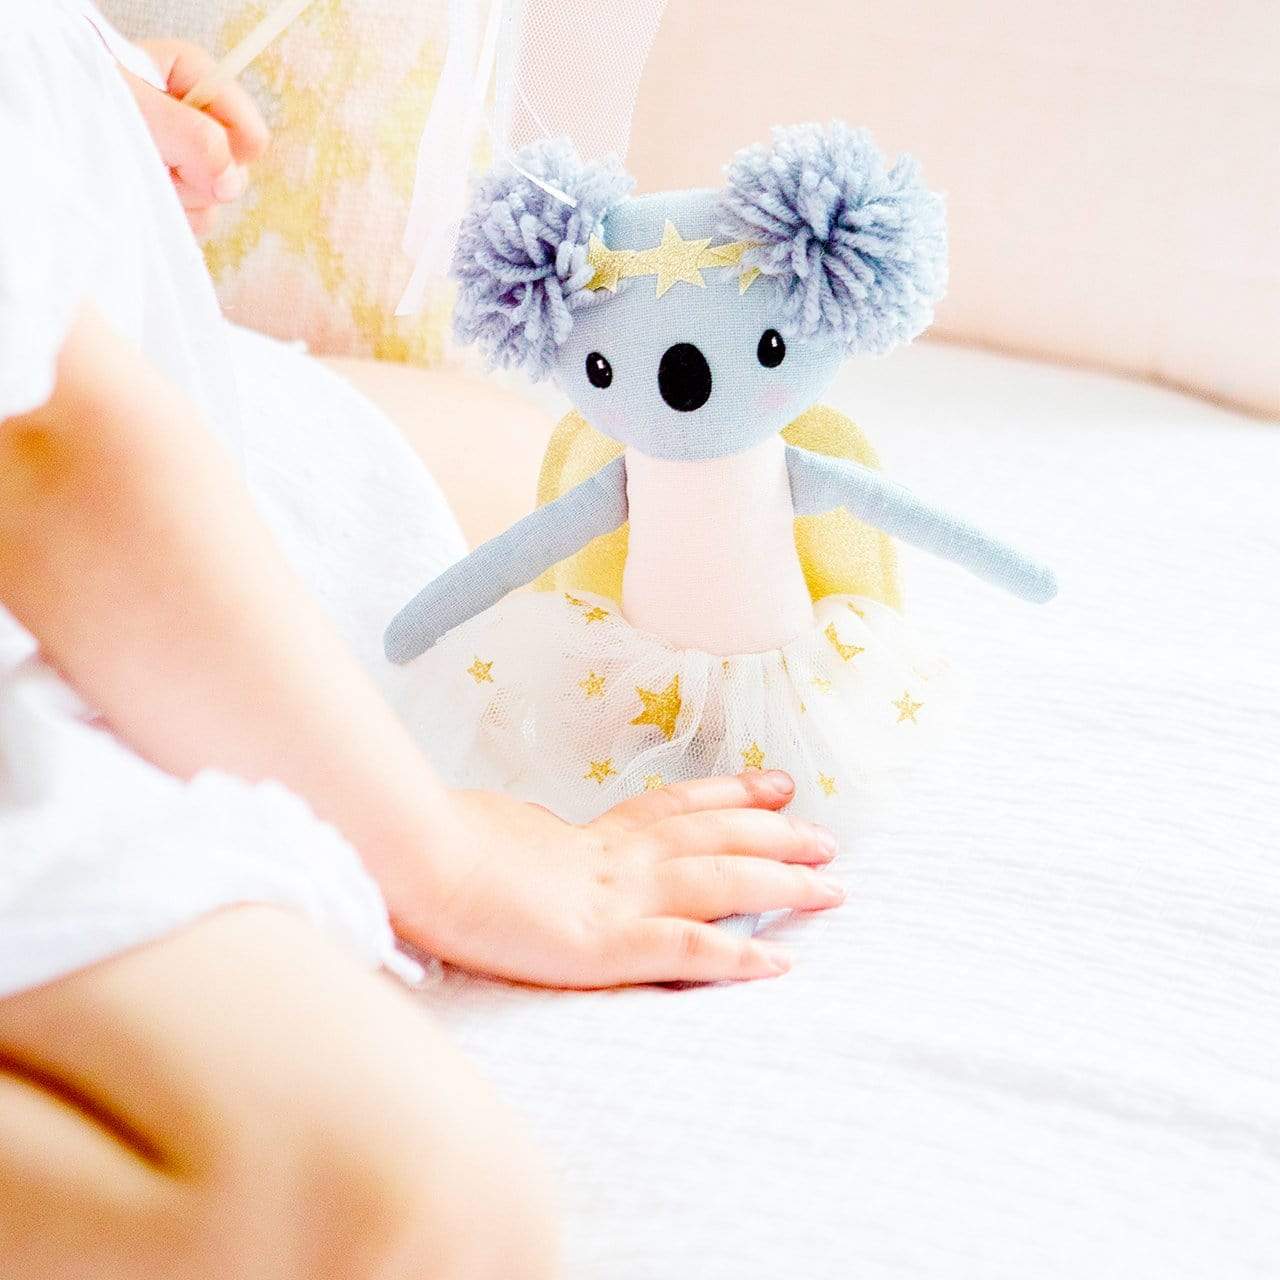 Baby koala Alimrose doll